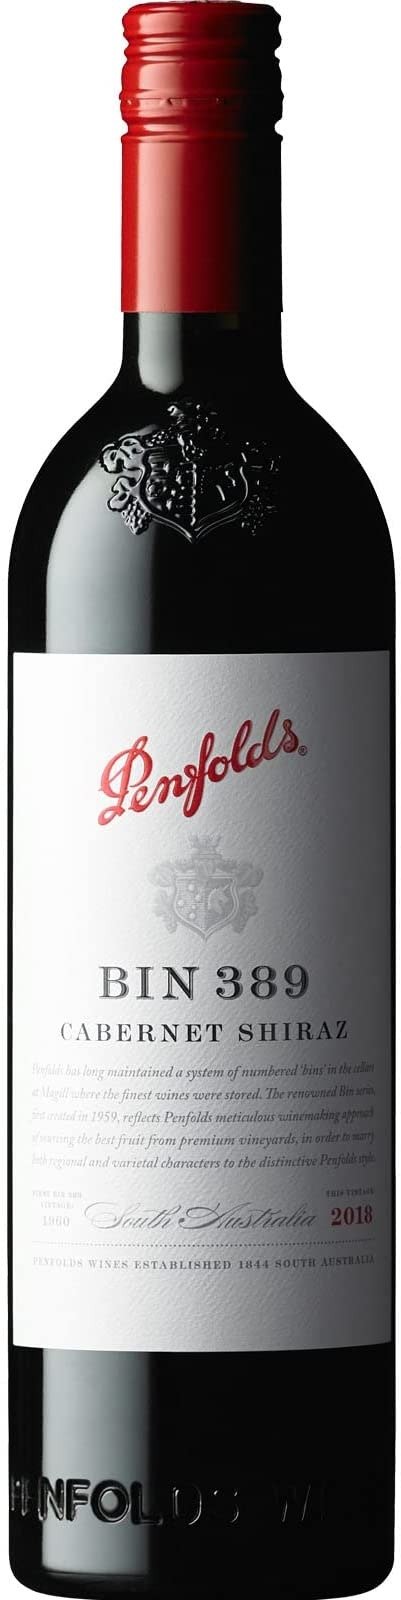 Bin 389 赤霞珠西拉高级葡萄酒 2019